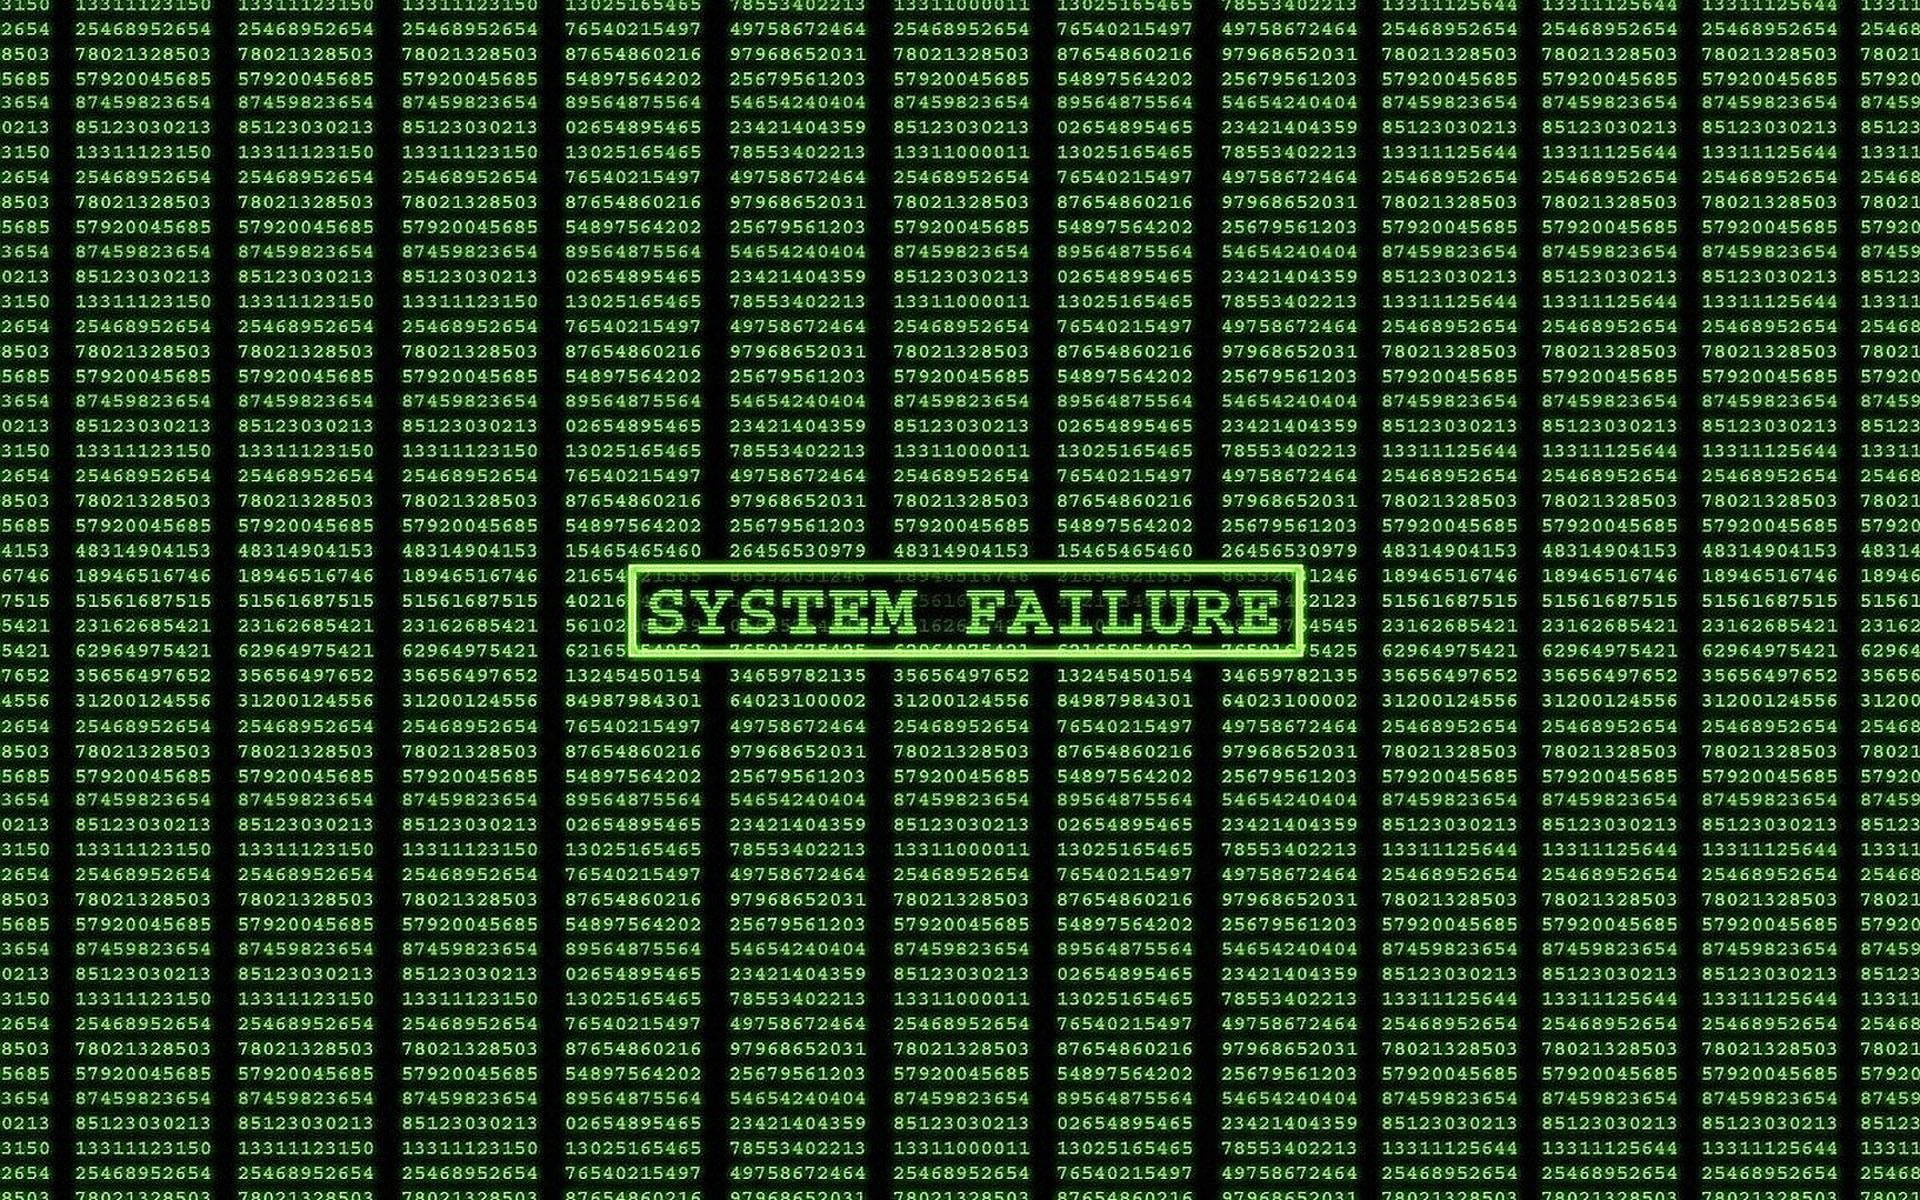 Aligned Green Matrix System Failure Background